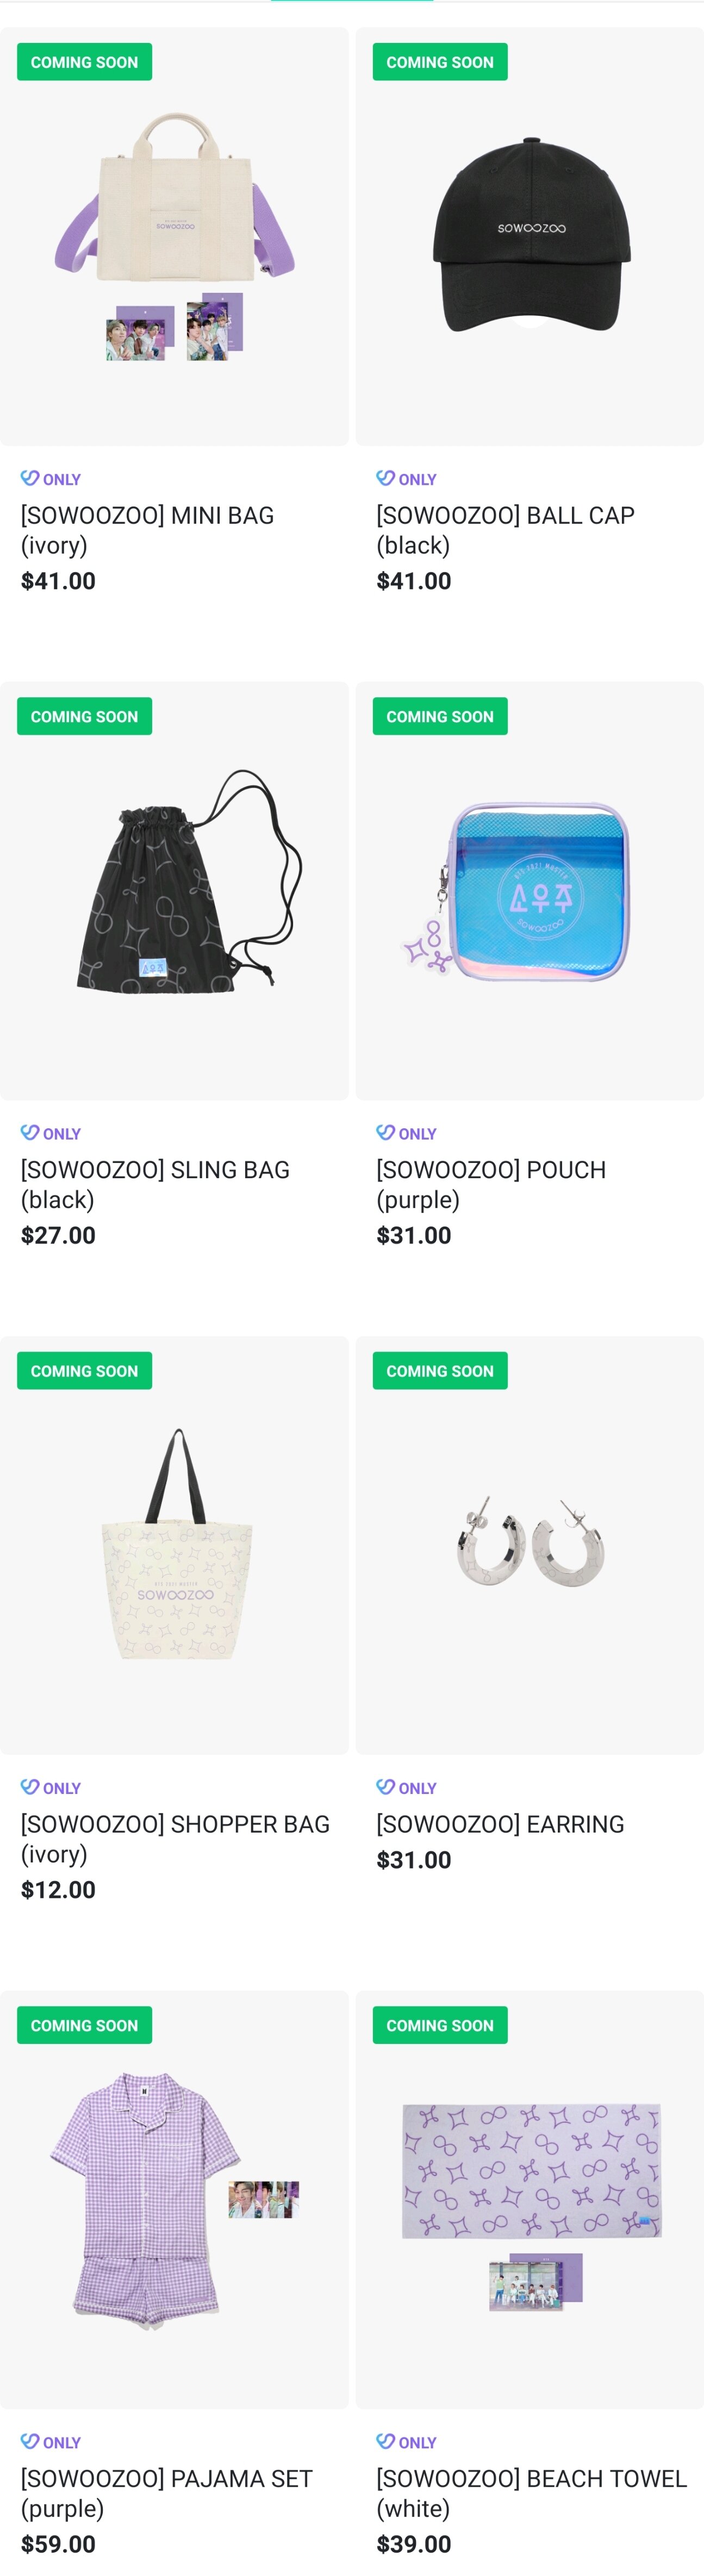 SOWOOZOO ivory mini bag, black baseball cap, black logo sling bag, purple pouch